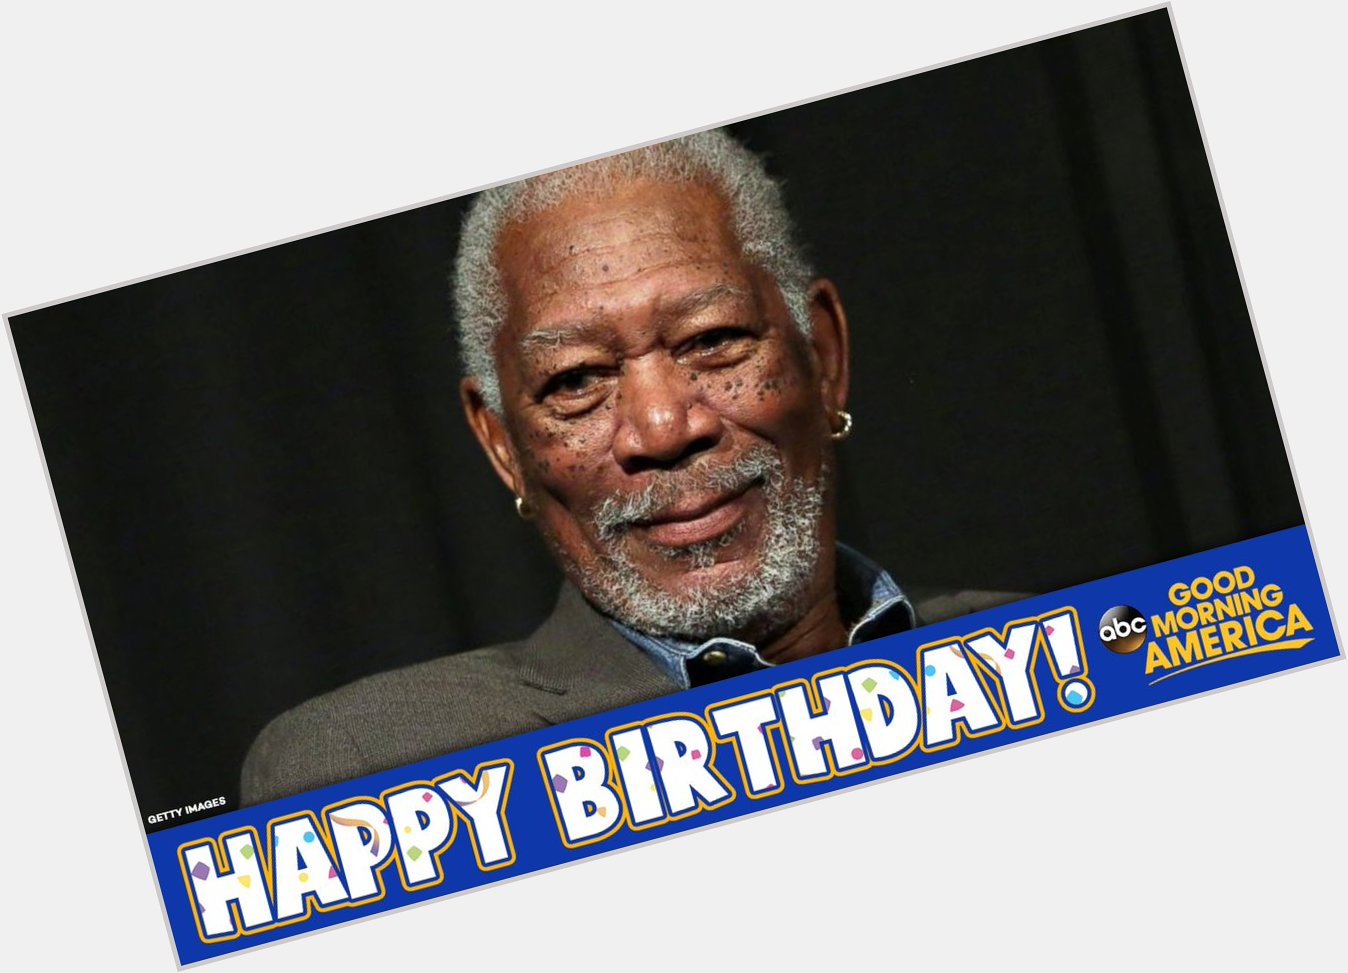 Happy birthday to Morgan Freeman!  